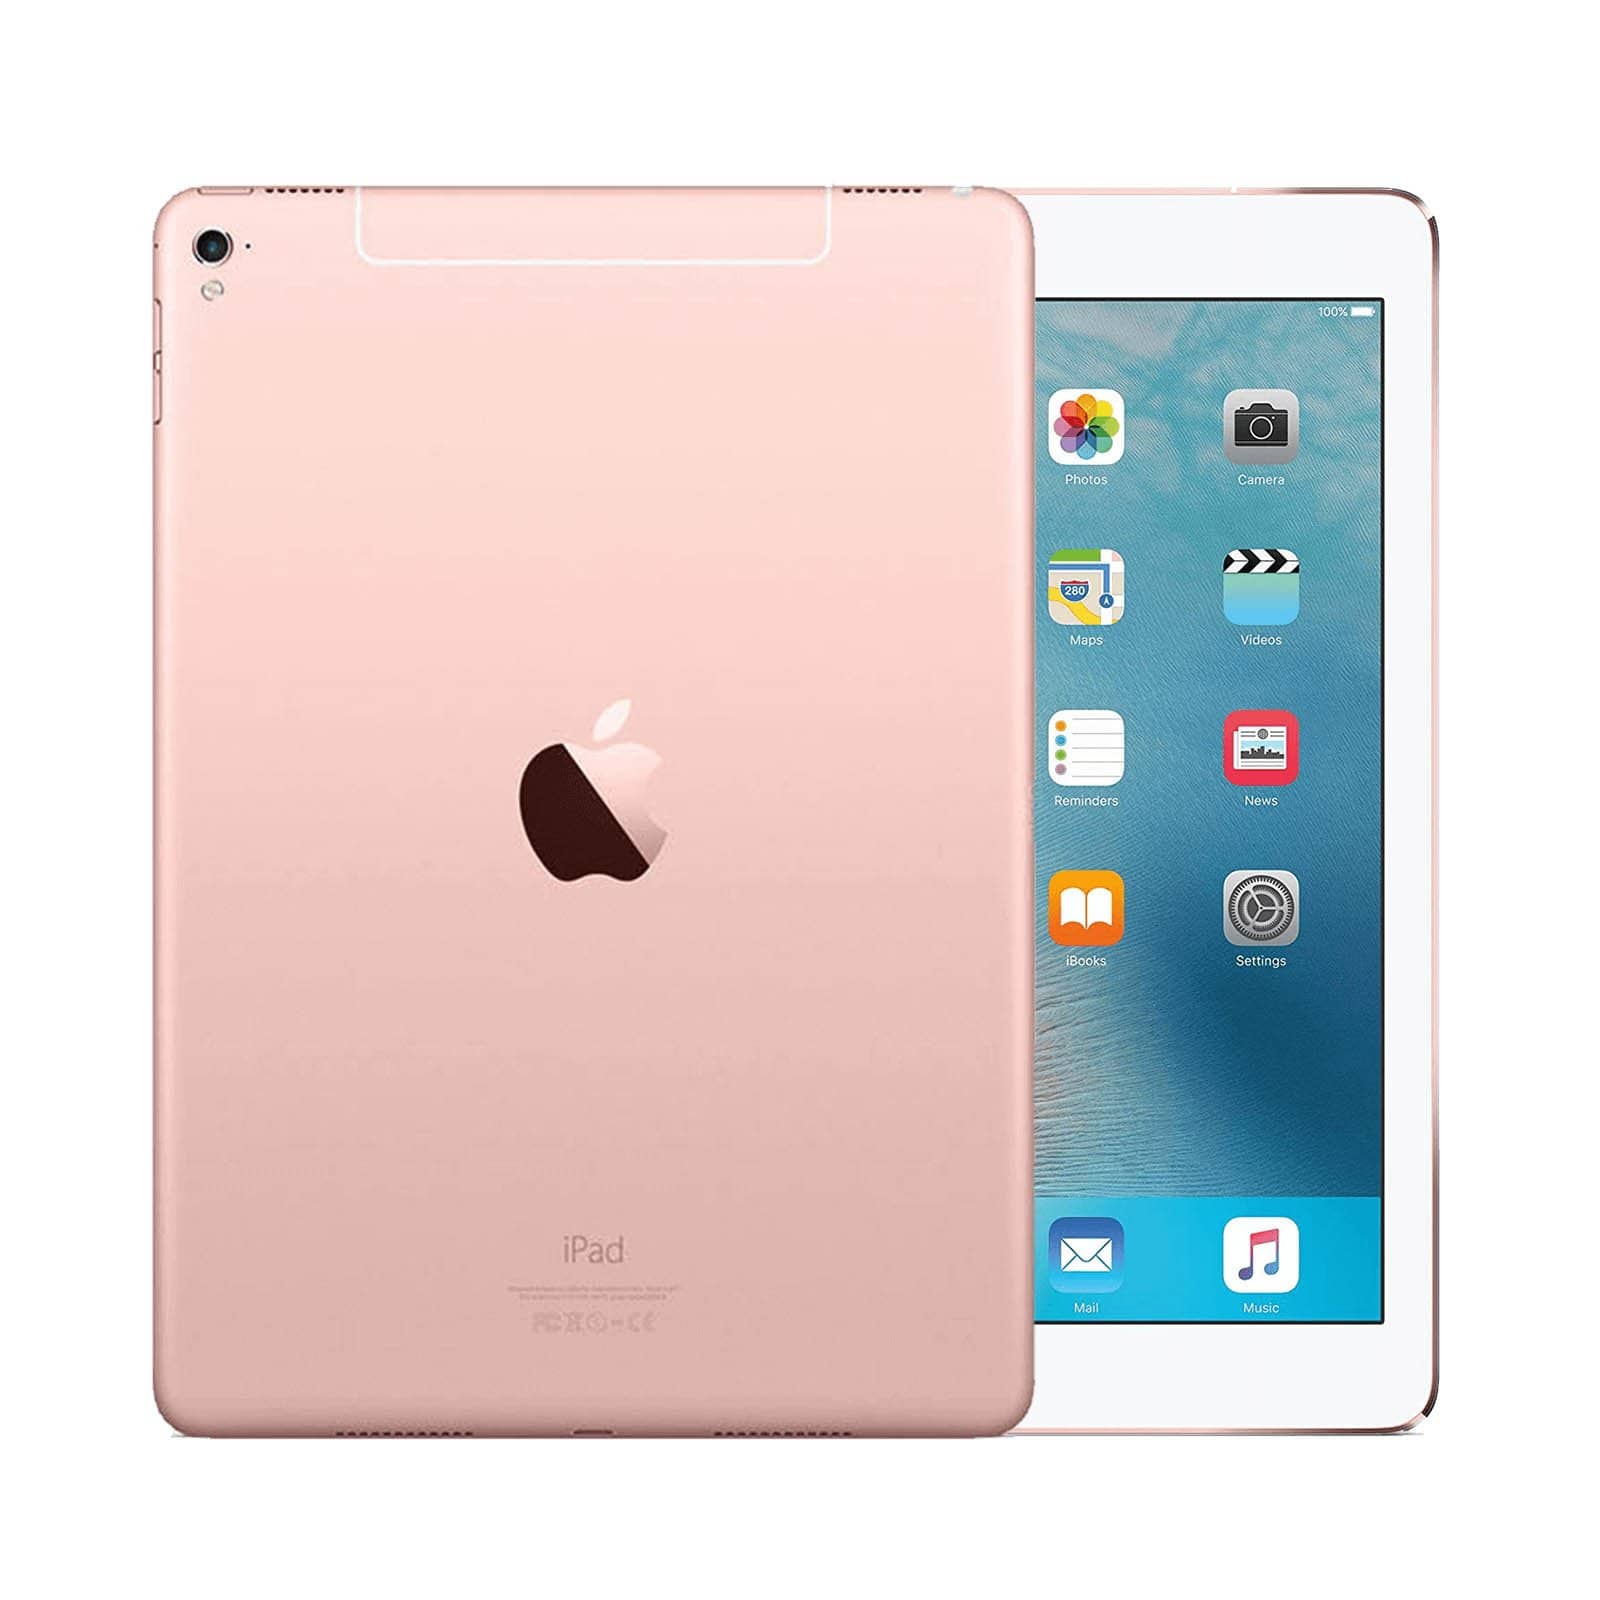 iPad Pro 9.7 Inch 32GB Rose Gold Good - Unlocked 32GB Rose Gold Good